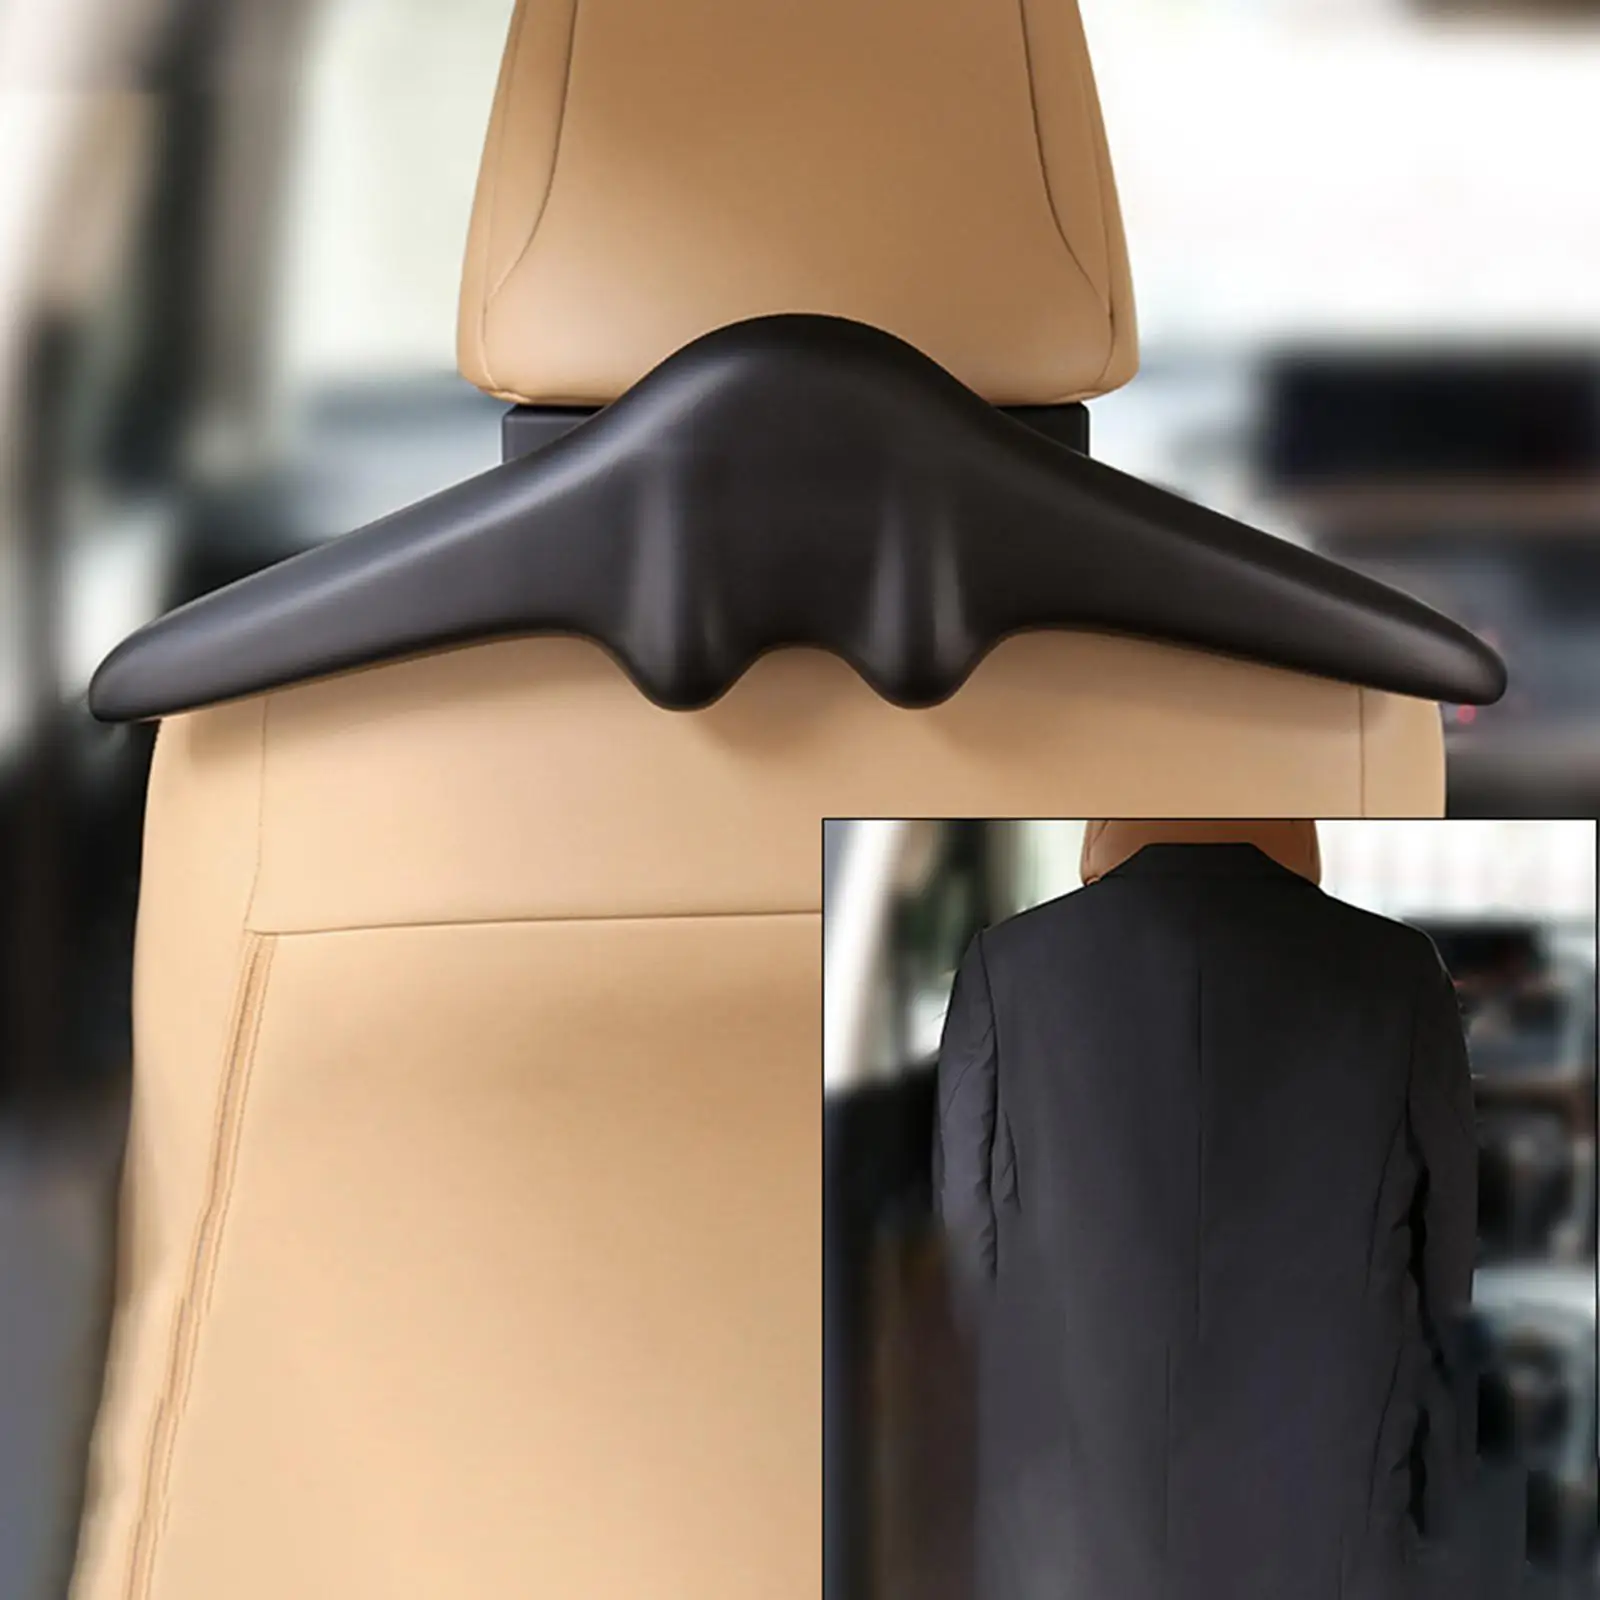 Multifunctional Car Coat Hangers Portable Safety Hanger Holder Fit for Bags